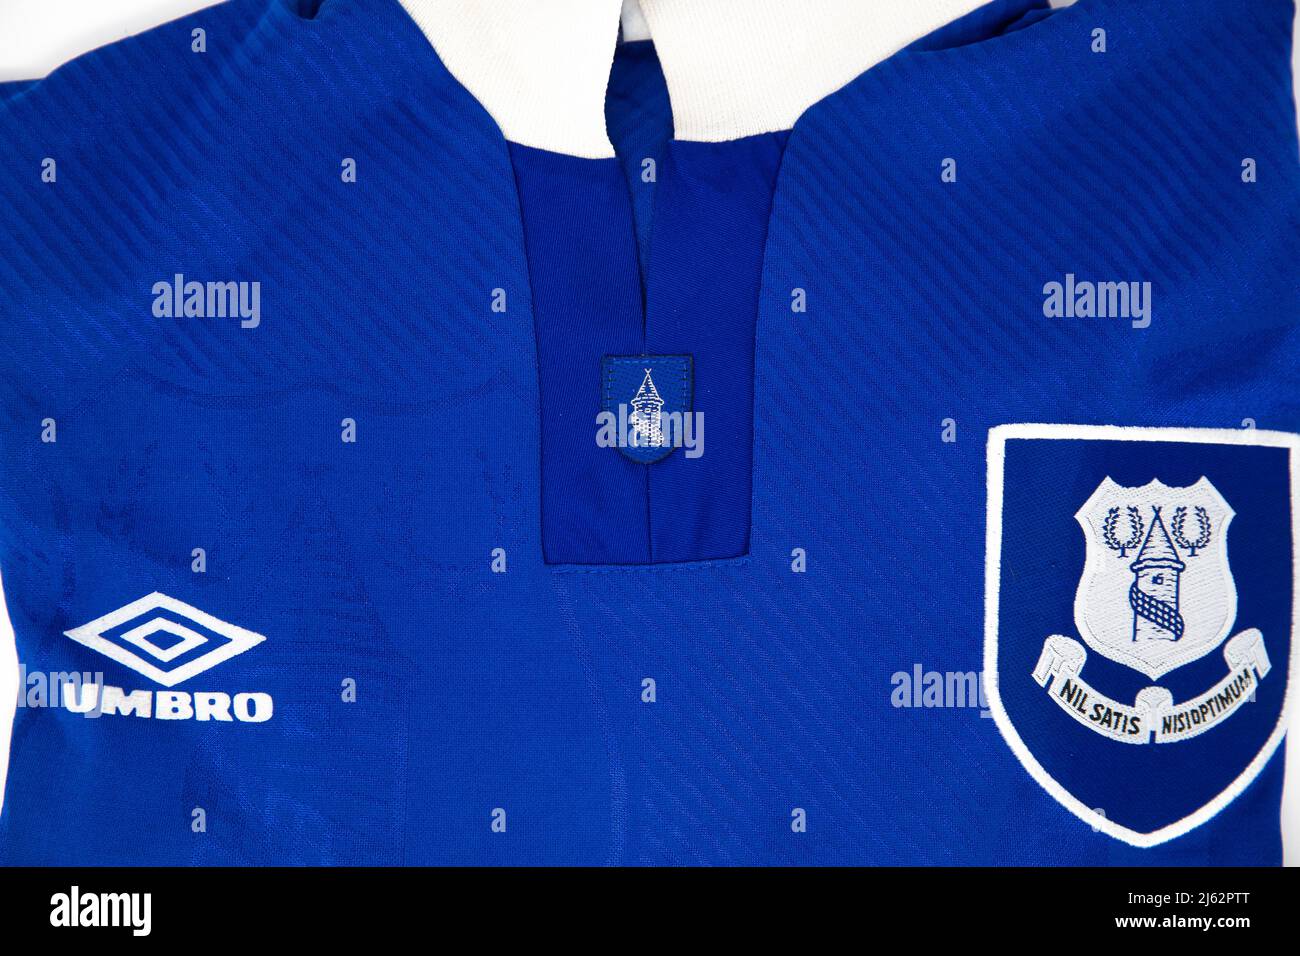 Everton Badge on a blue folded Umbro football shirt Stock Photo